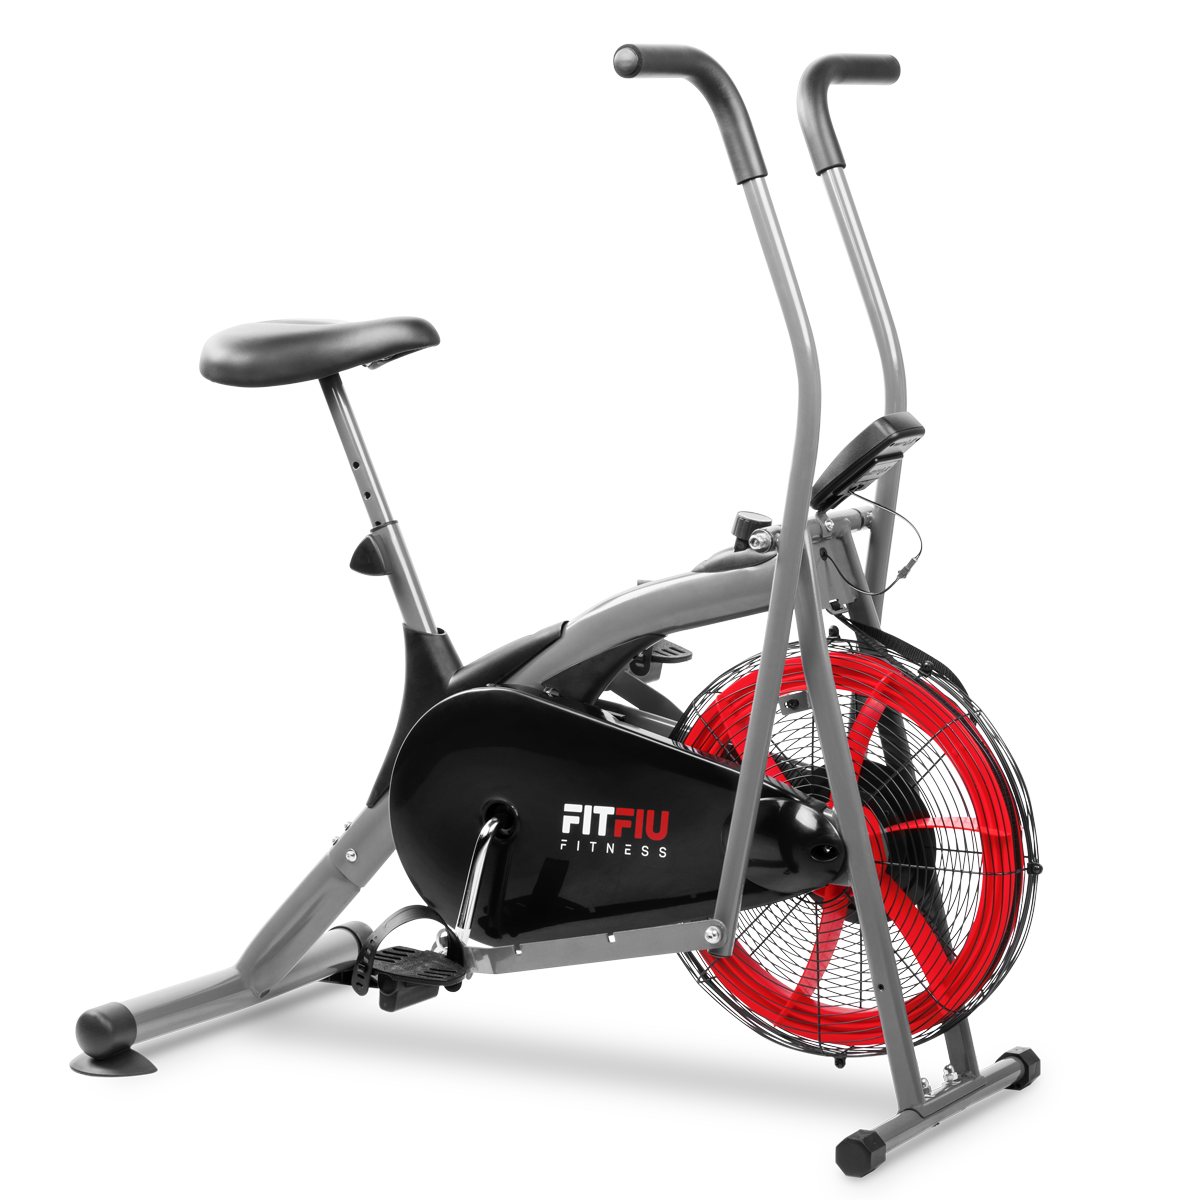 Fitfiu Fitness Beli150 bicicleta con de aire cross training regulable y pantalla lcd mult fiu